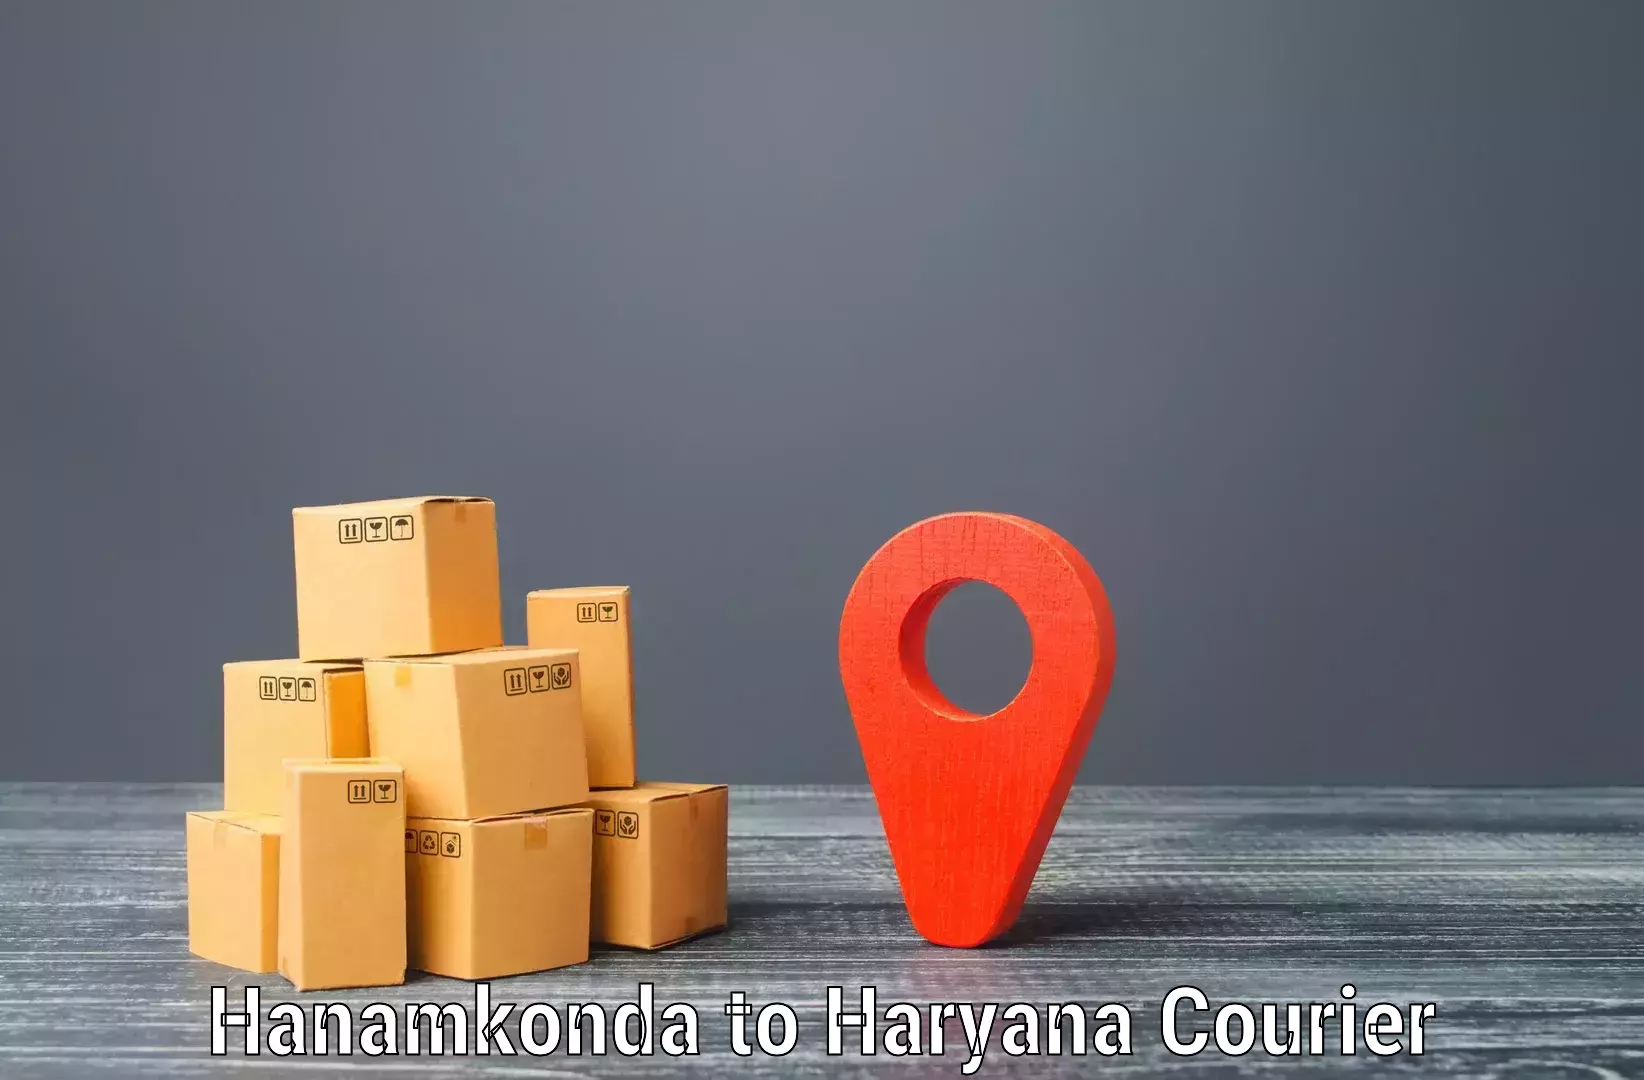 Premium delivery services Hanamkonda to Charkhari